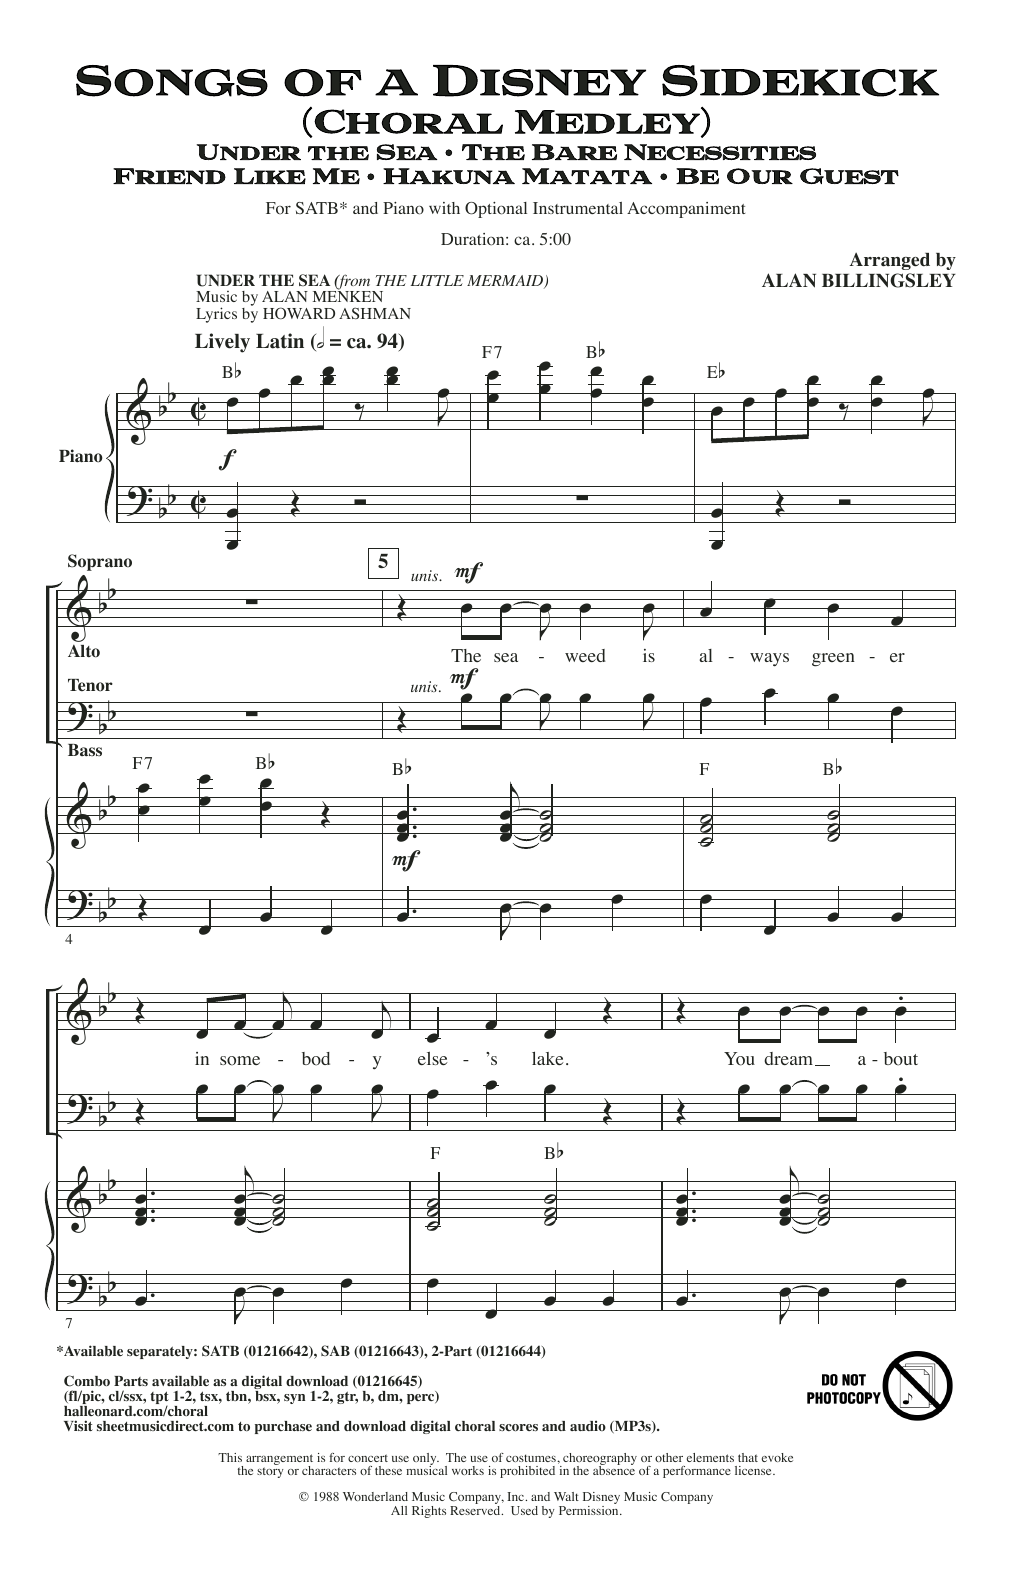 Alan Billingsley Songs Of A Disney Sidekick (Choral Medley) sheet music notes printable PDF score